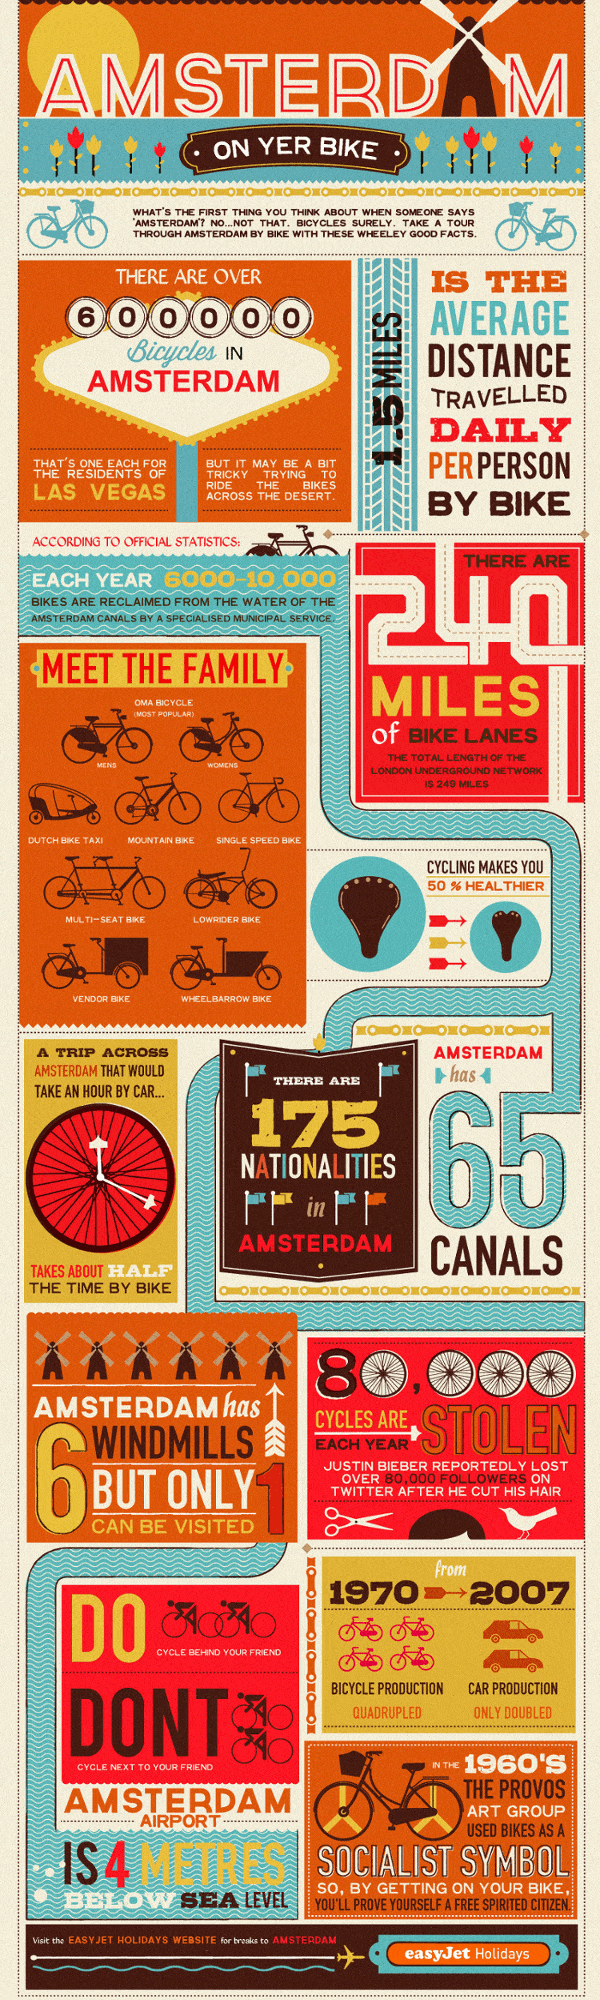 Amsterdam bike guide infographic